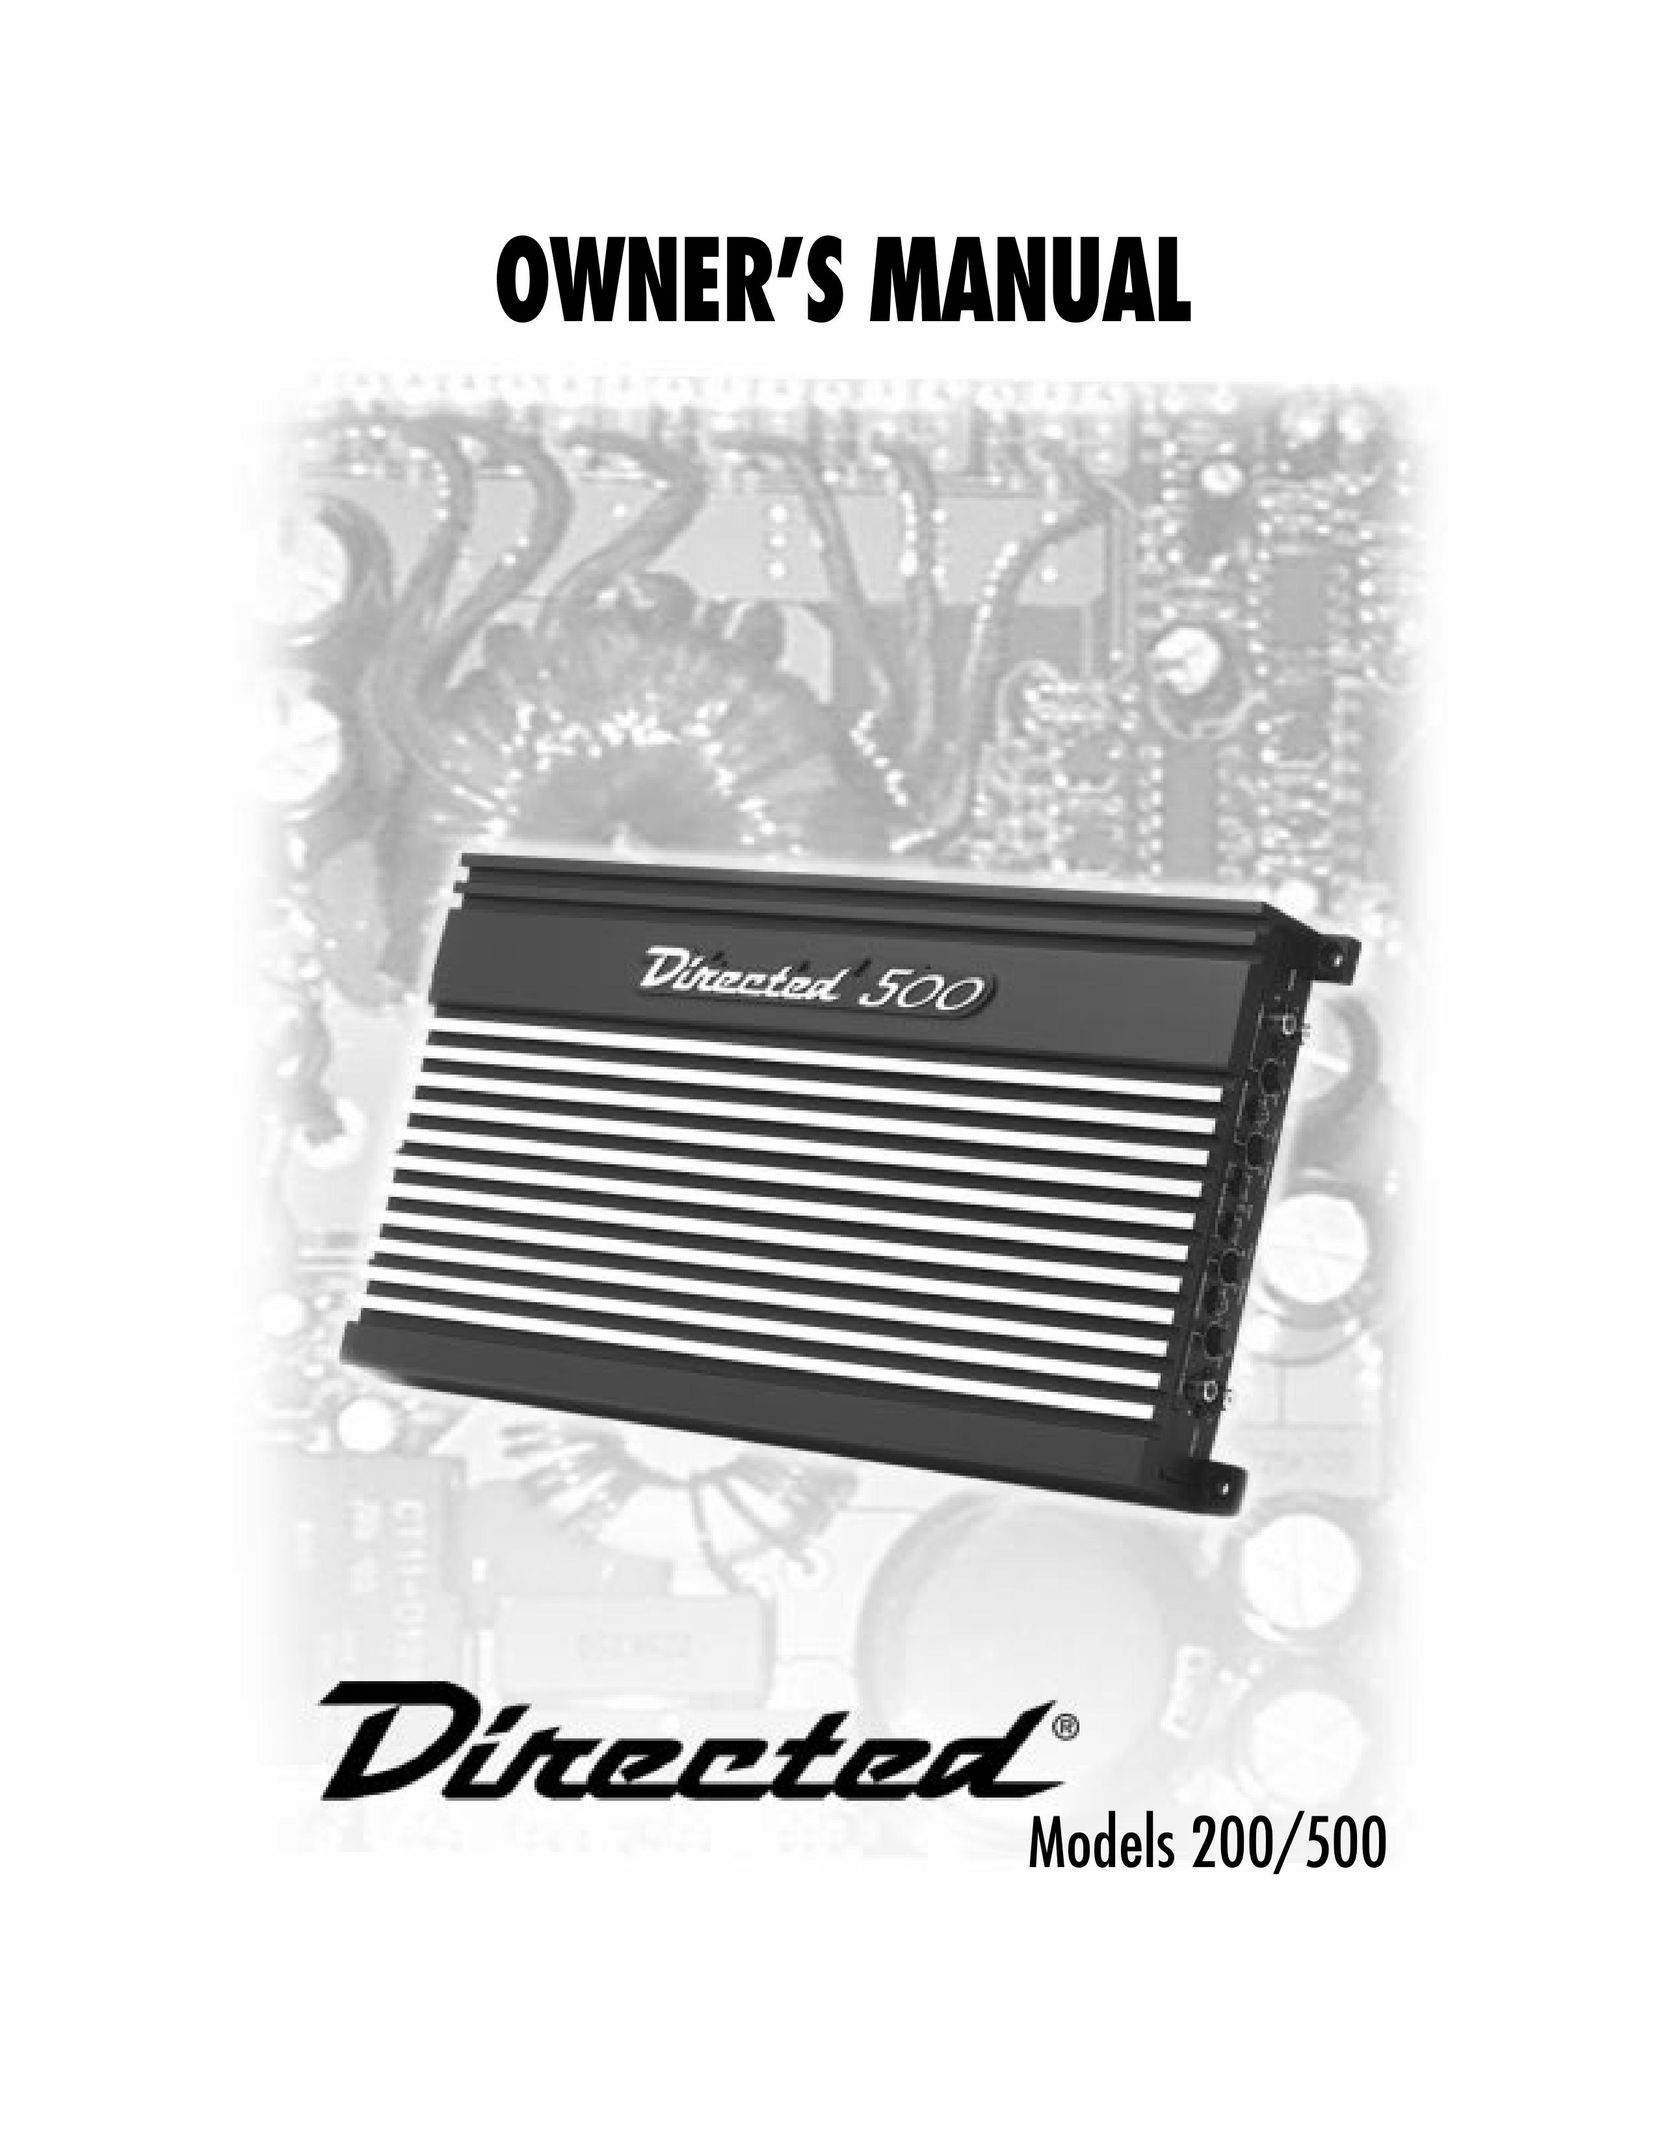 Directed Audio 200/500 Car Amplifier User Manual